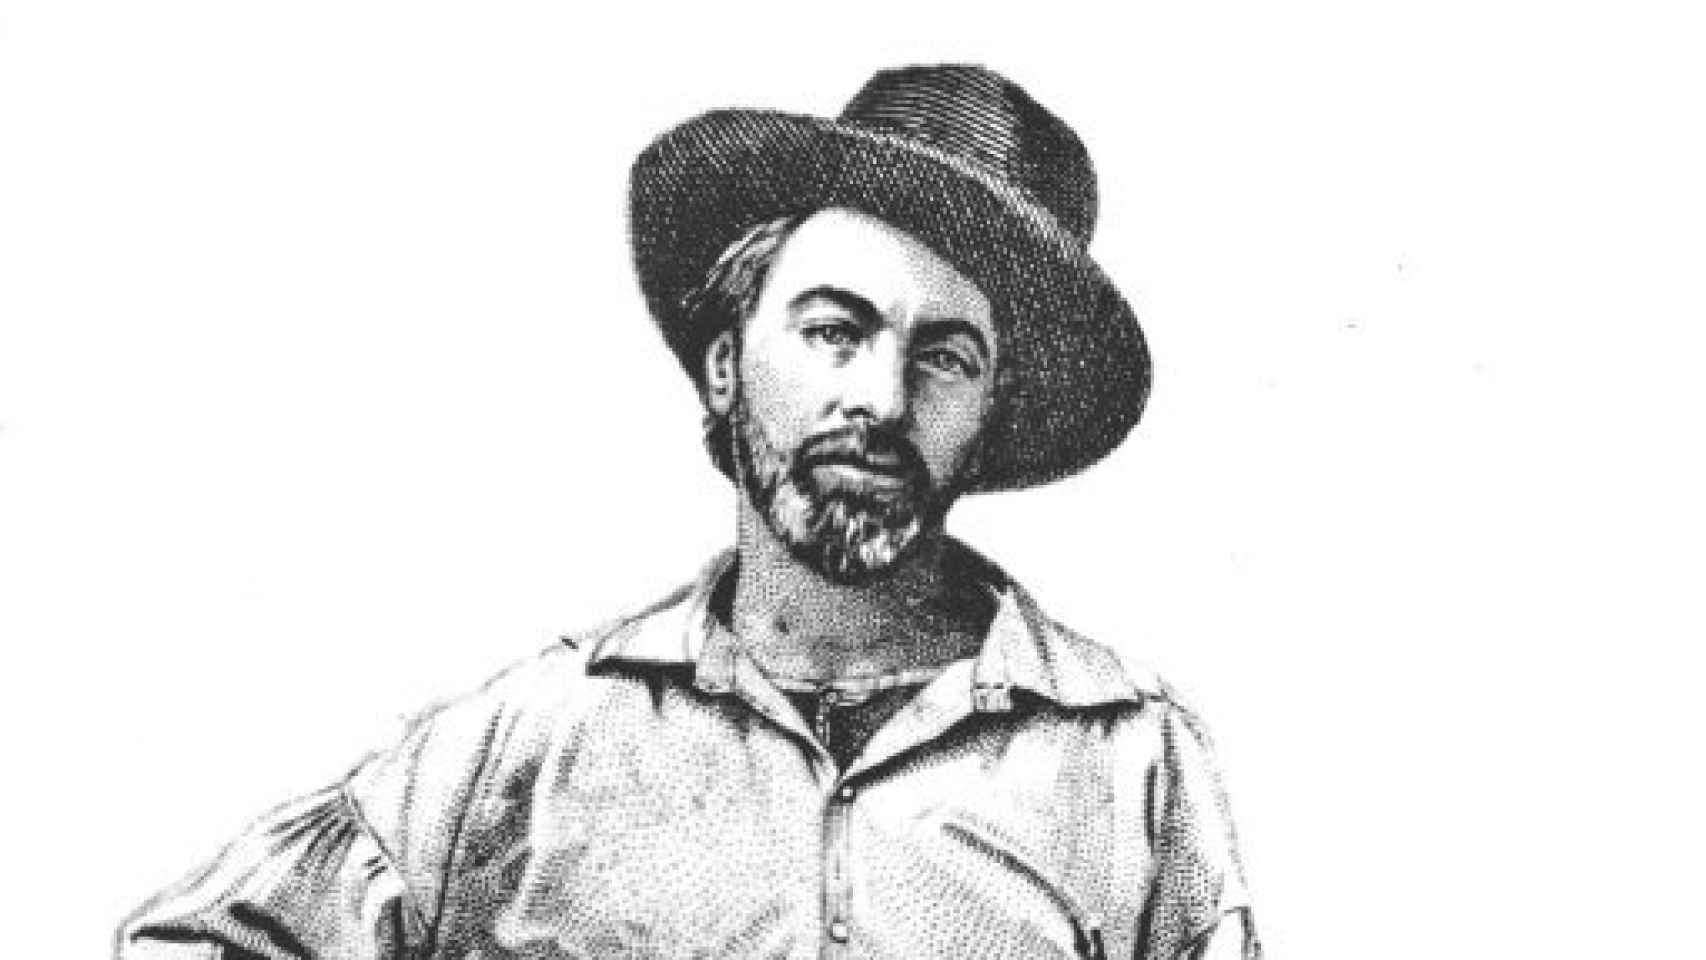 Image: Walt Whitman. Vida y aventuras de Jack Engle